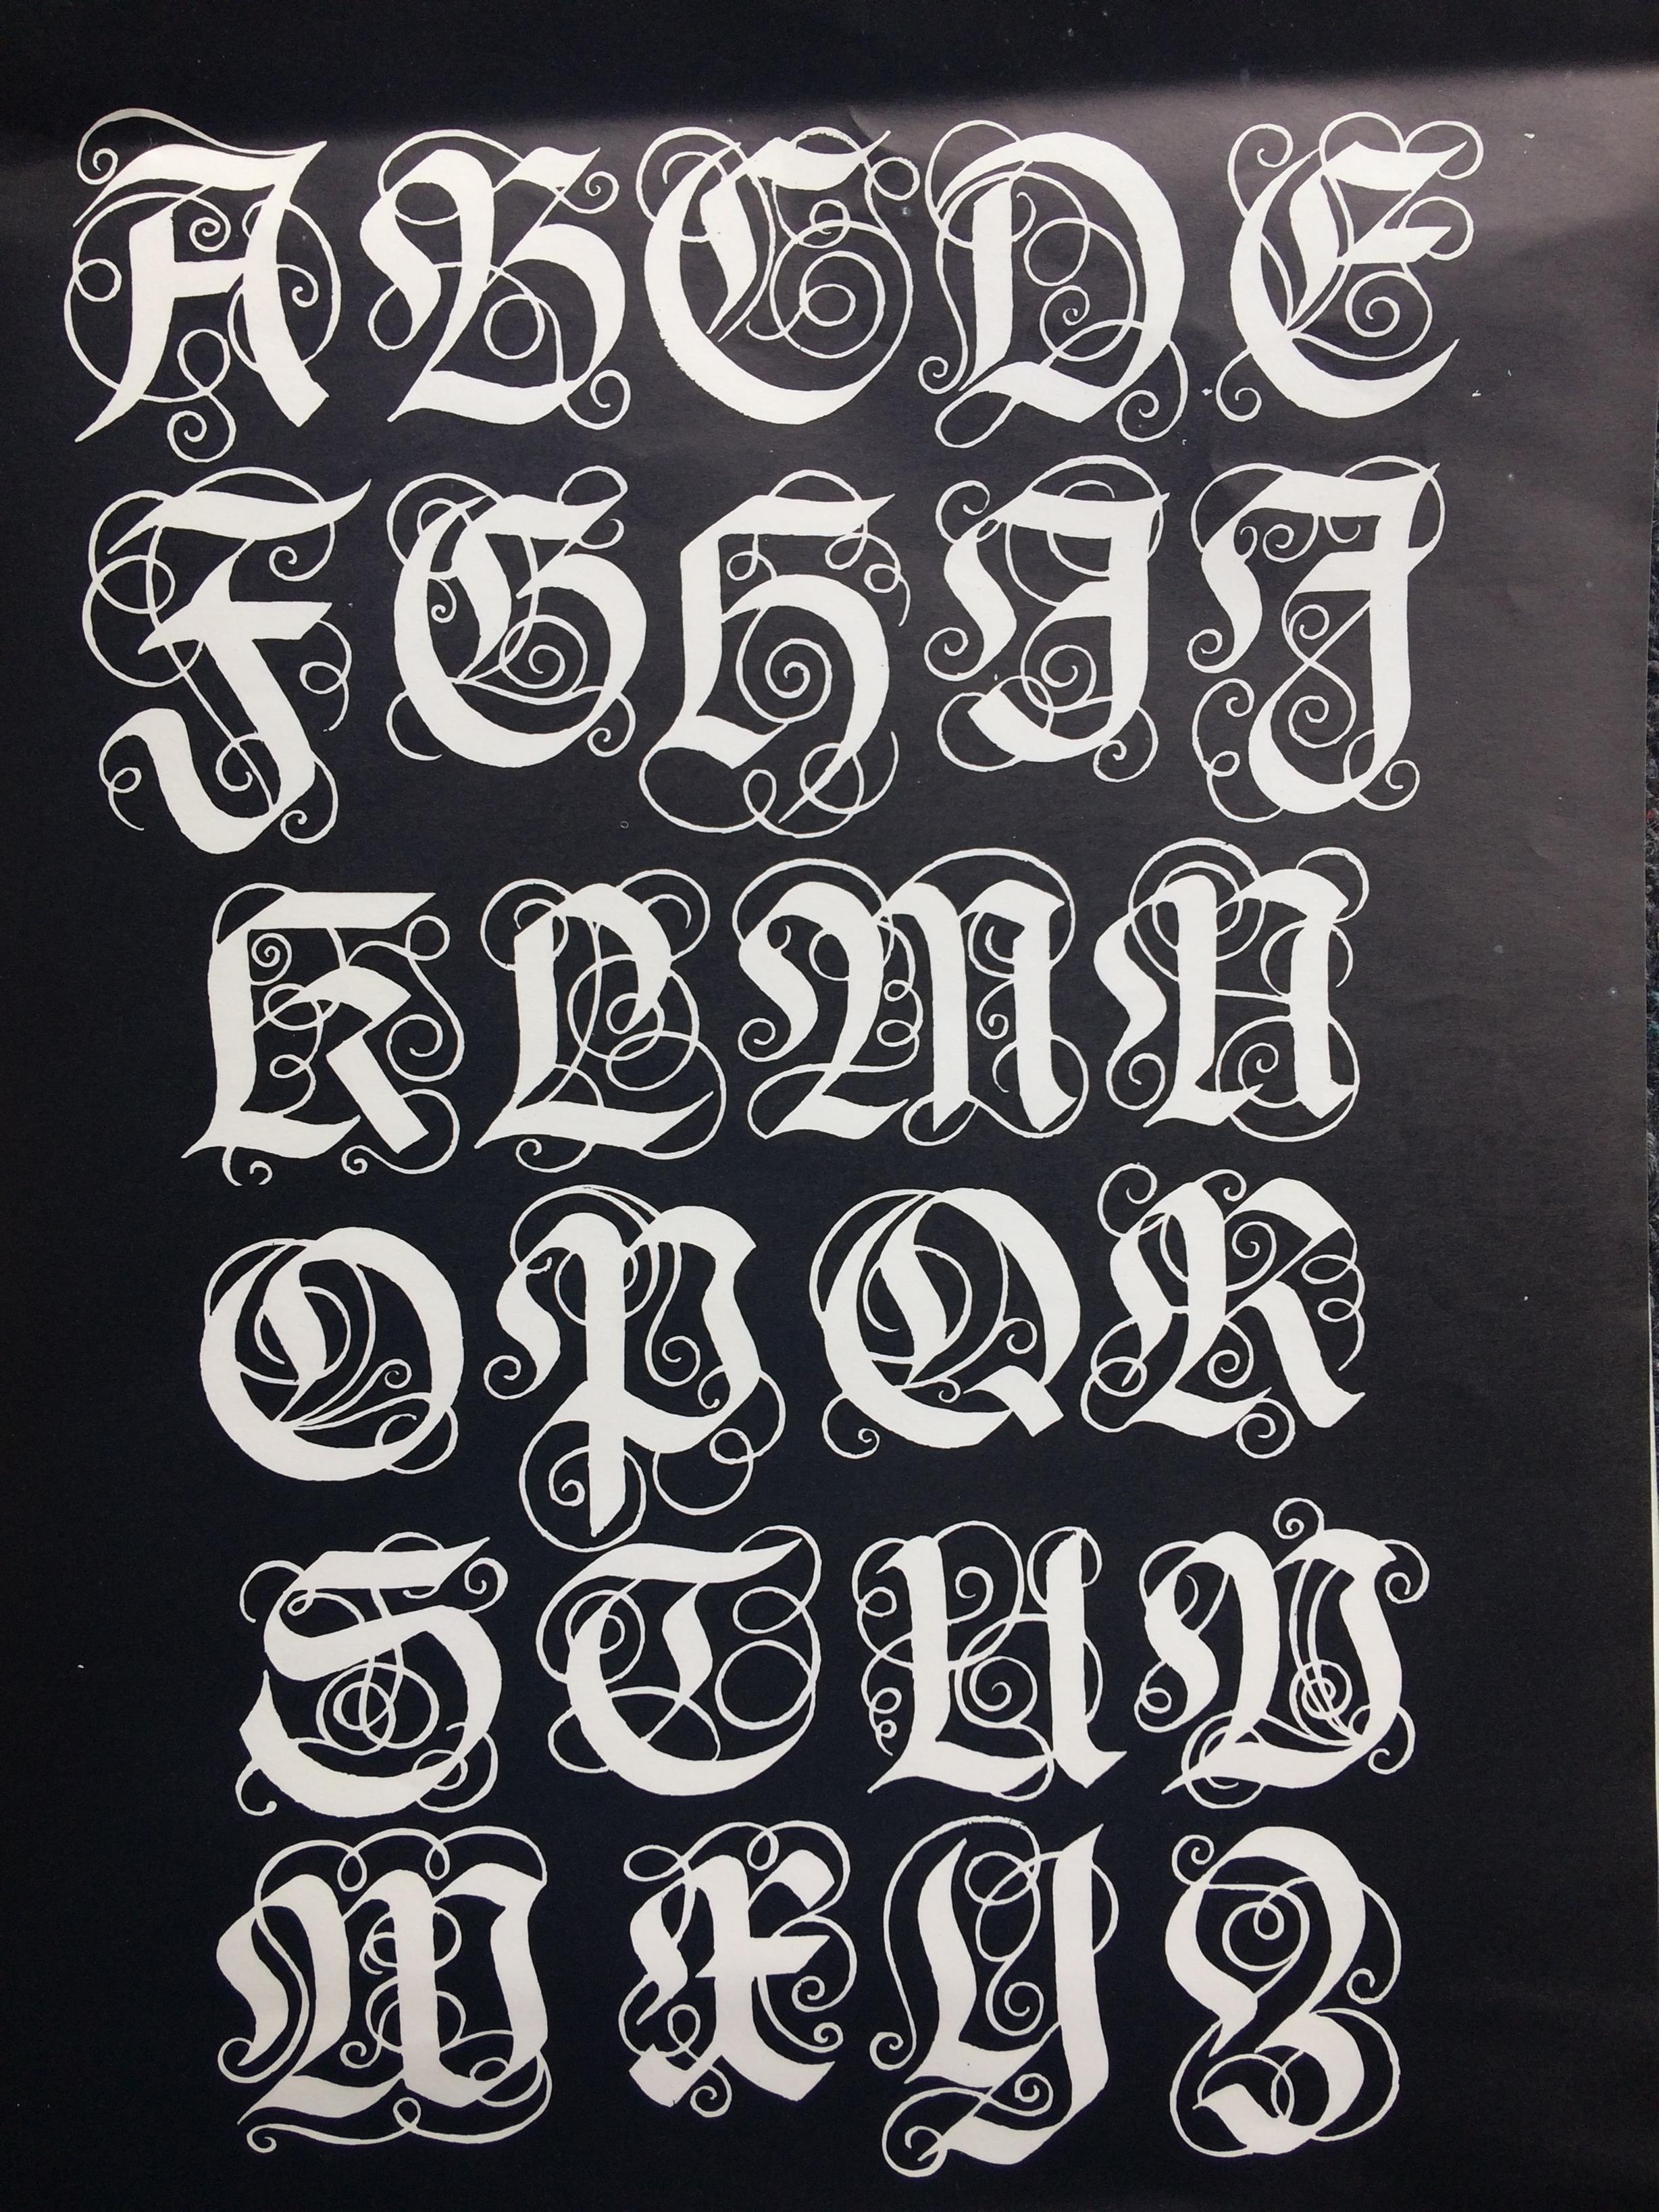 TB Glass Engraving Stencil Alphabets